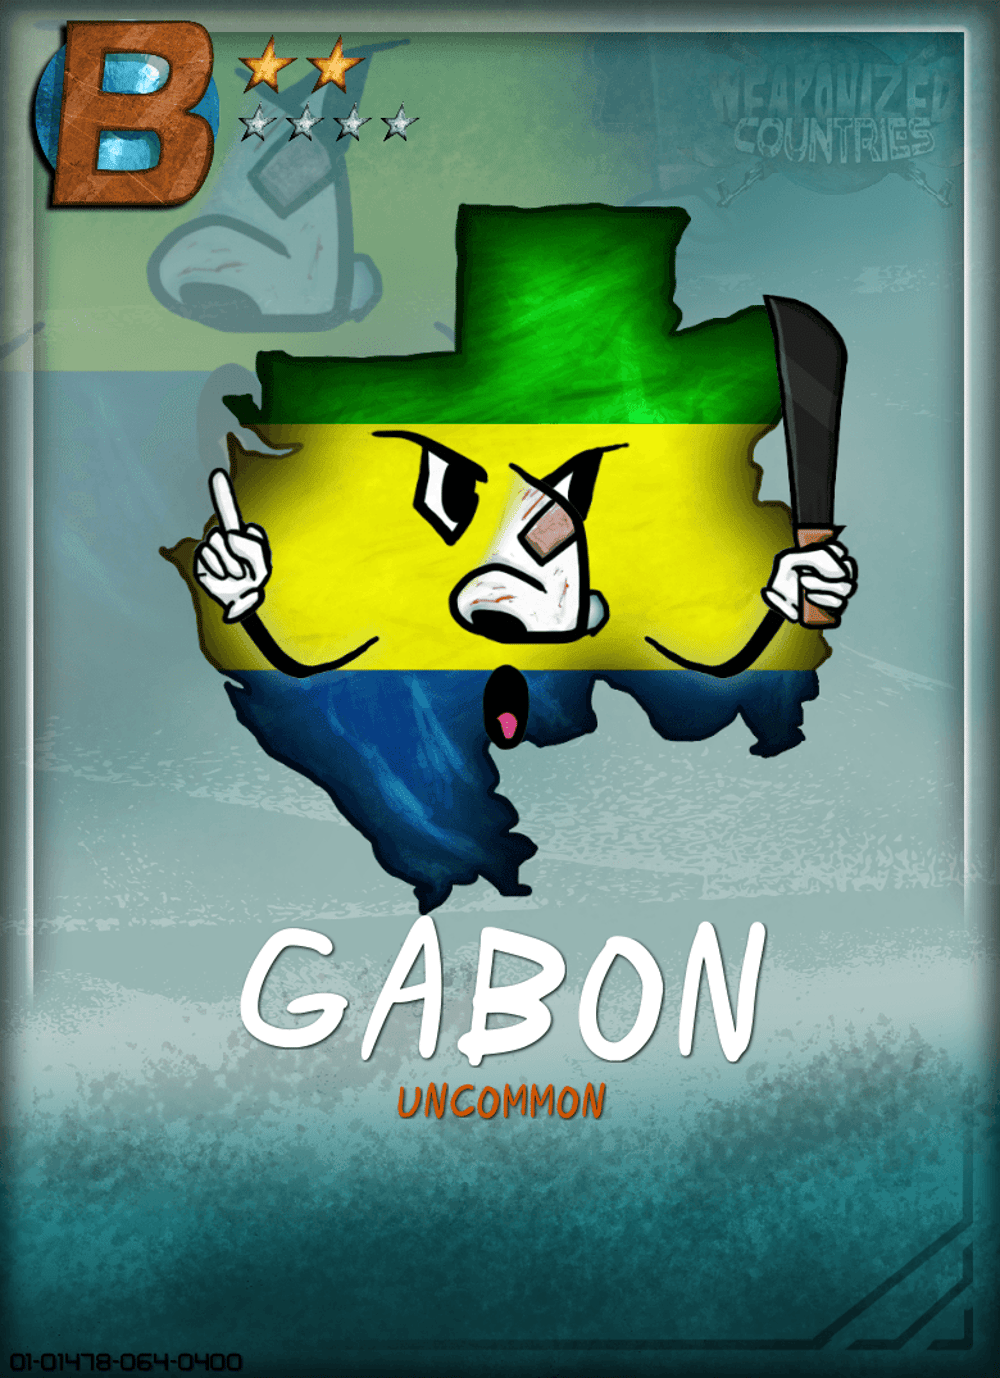 Weaponized Countries #1478 Gabon